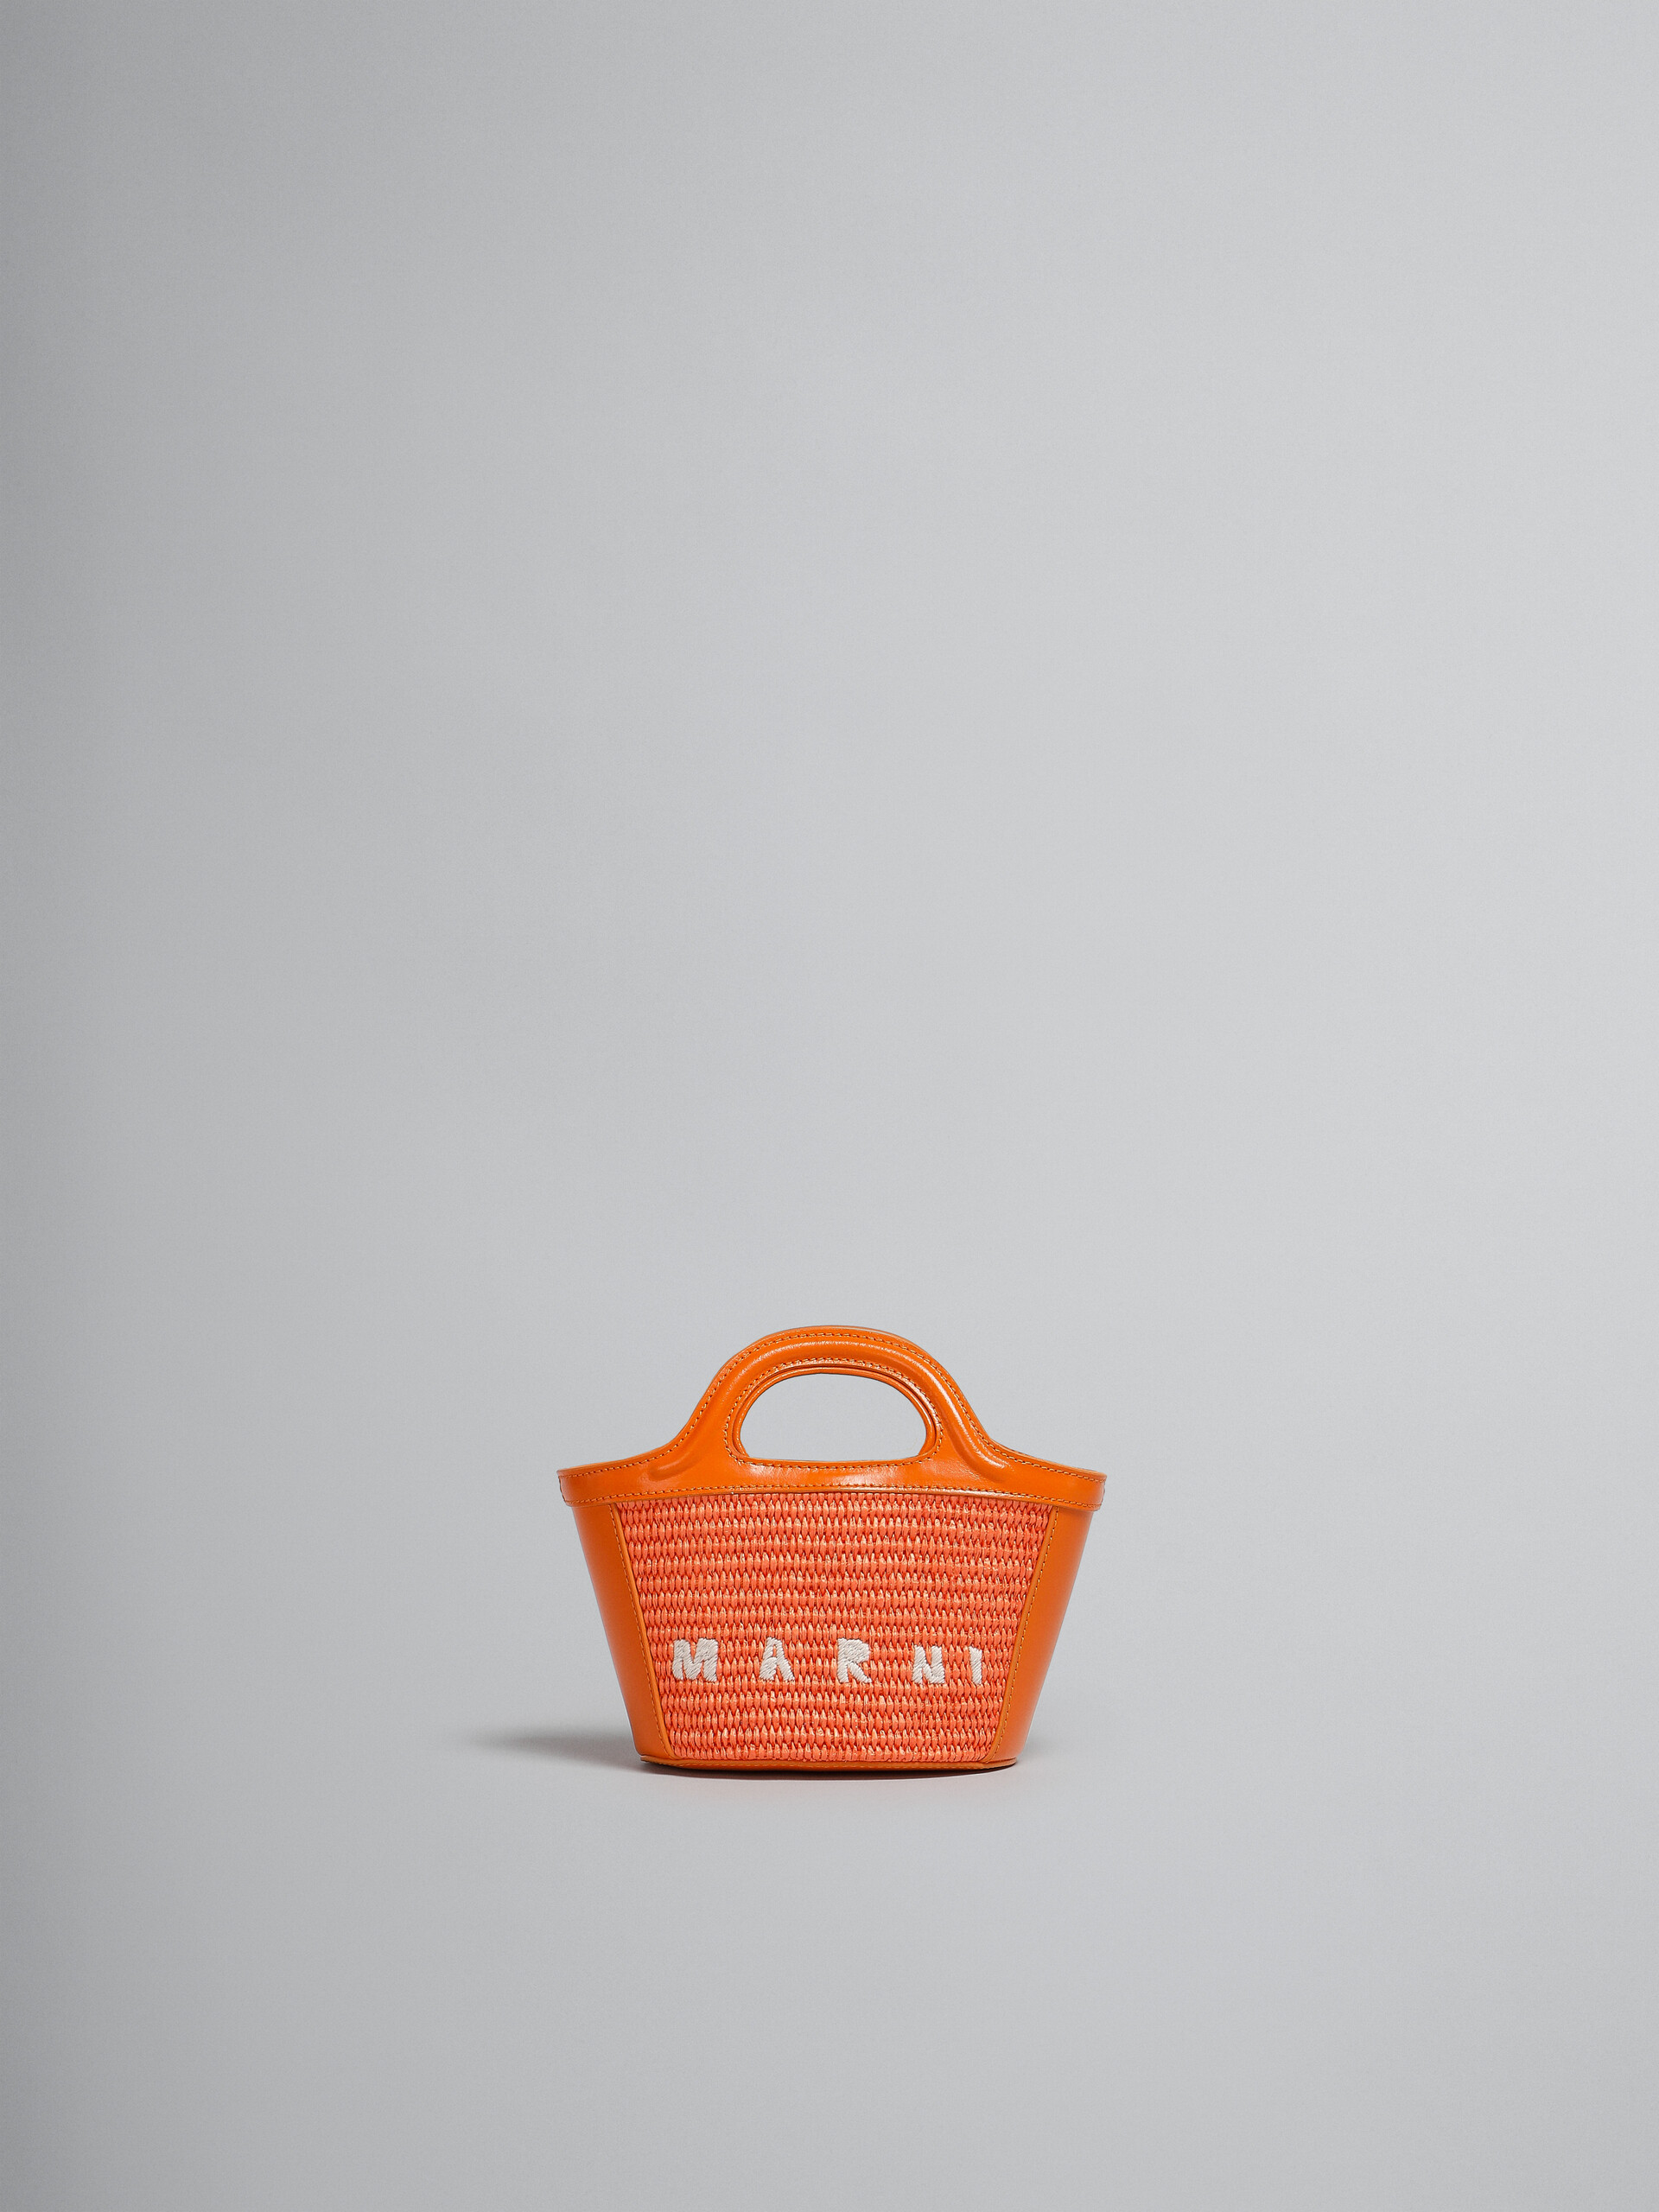 Tropicalia Micro Bag in orange leather and raffia - Handbags - Image 1